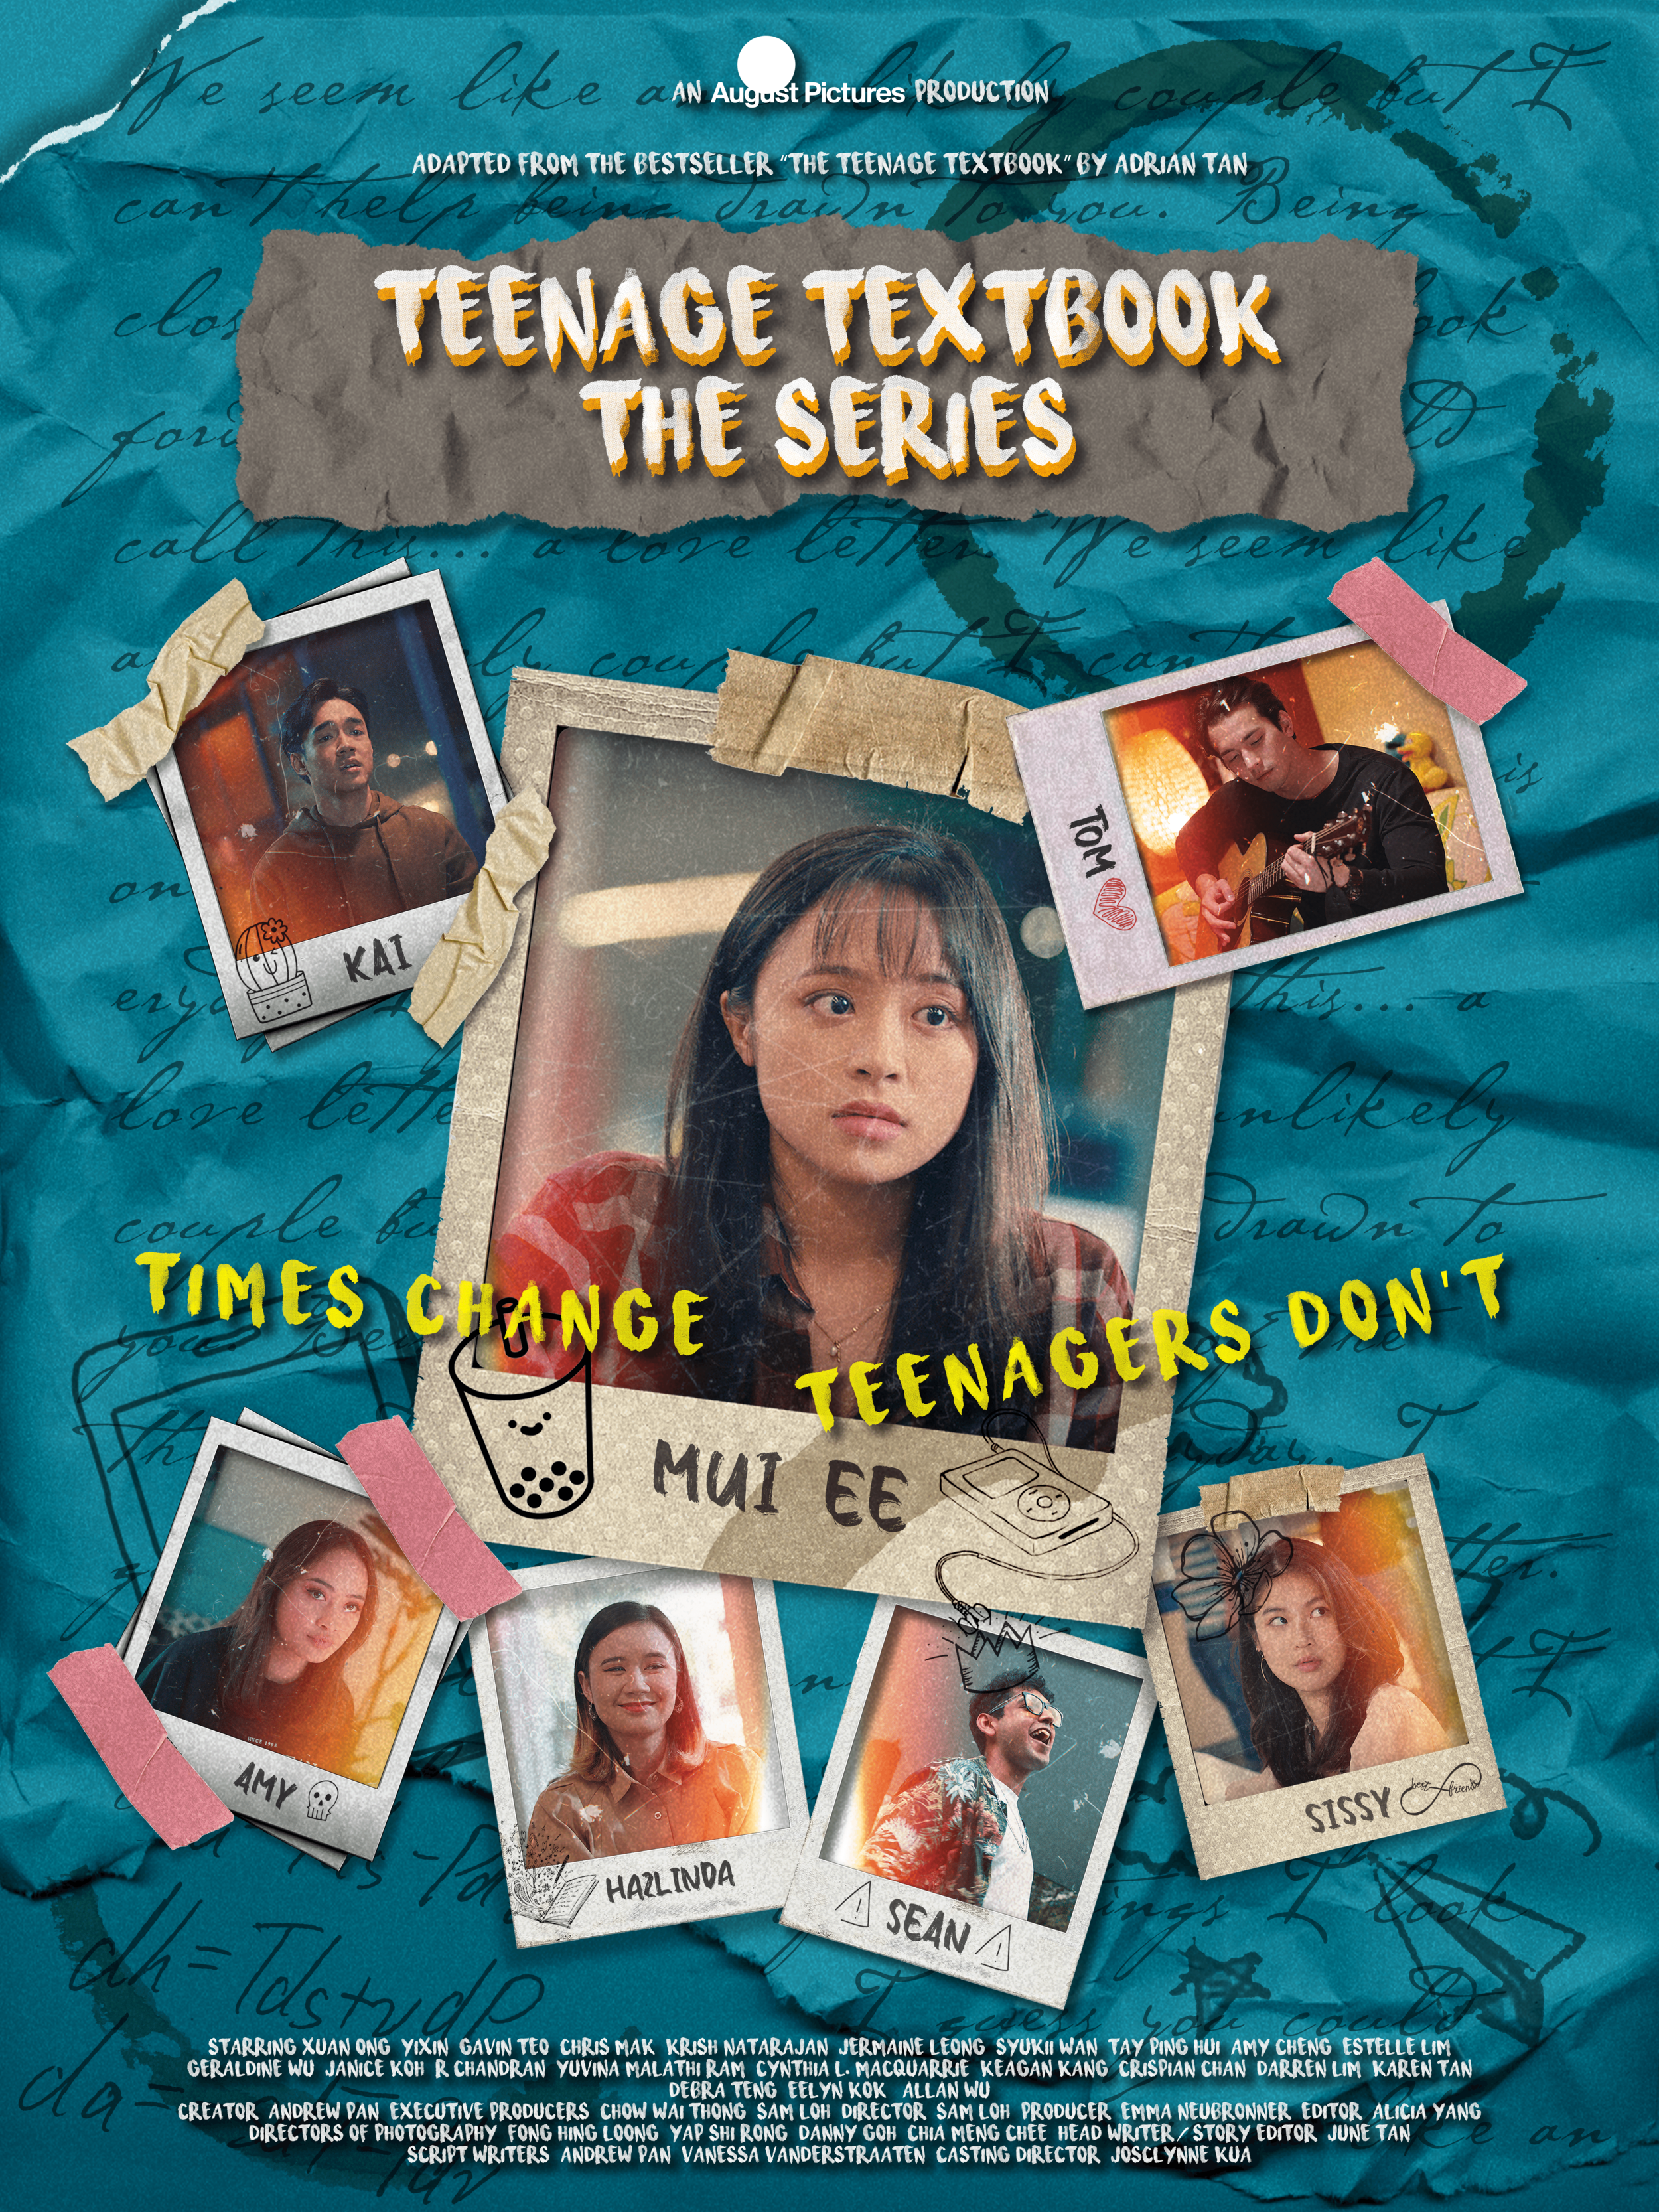 Teenage Textbook: The Series